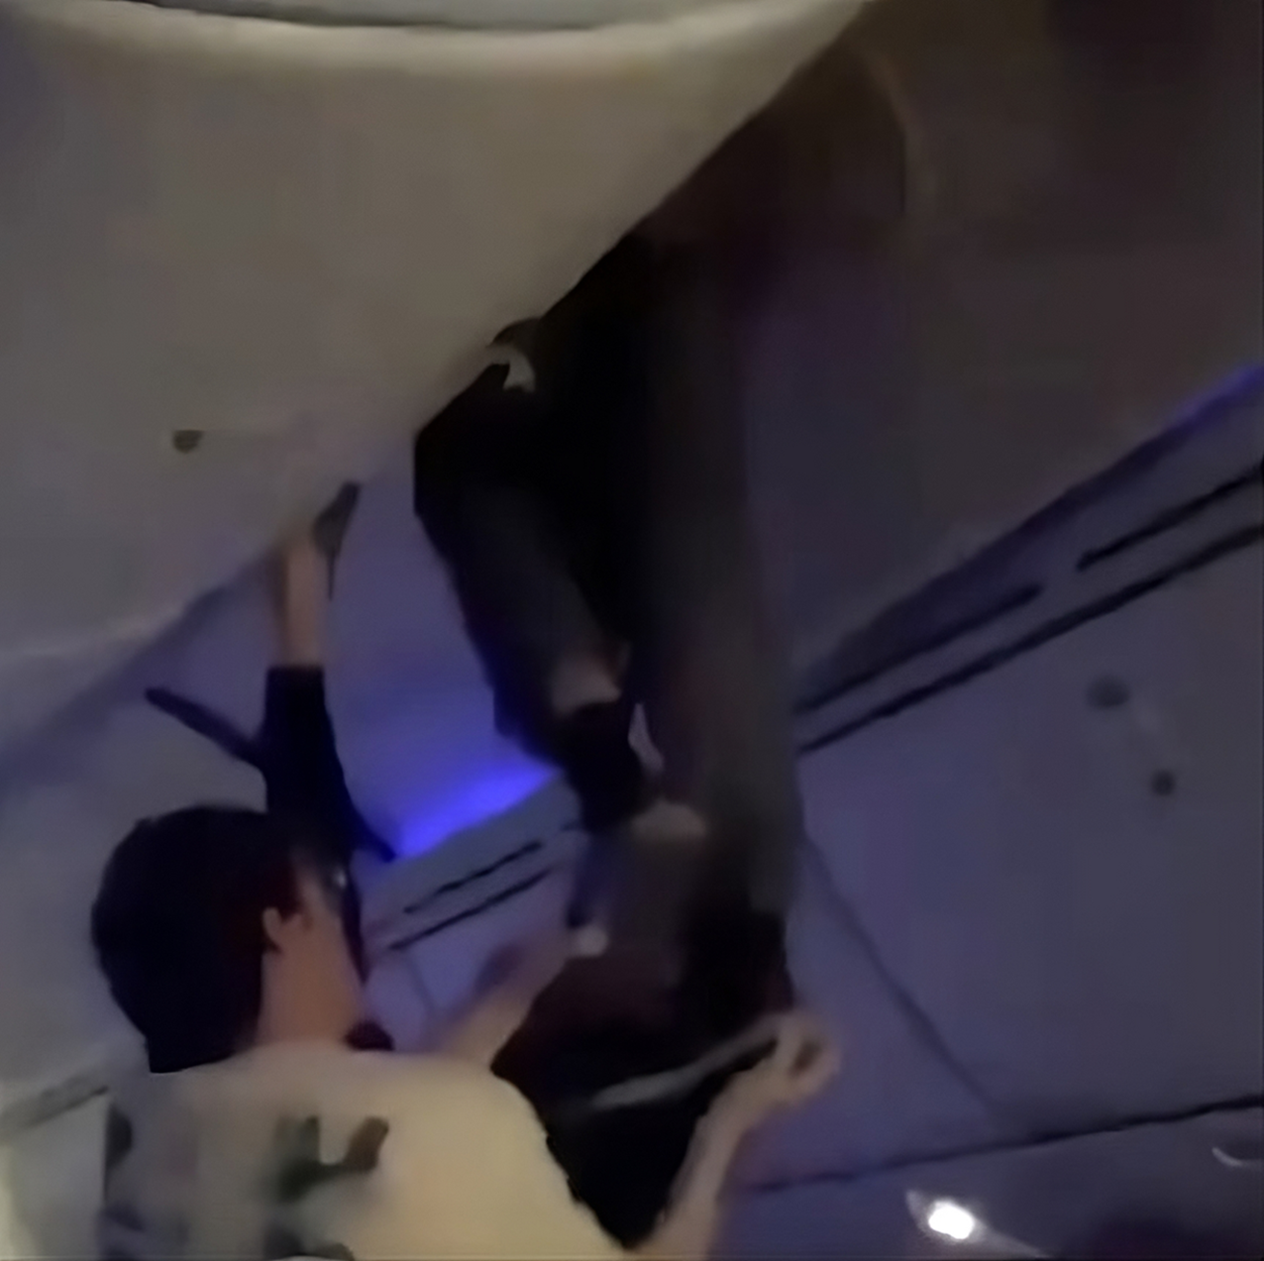 Unbelievable Video: Passenger Lodged in Overhead Bin During Terrifying Transatlantic Turbulence